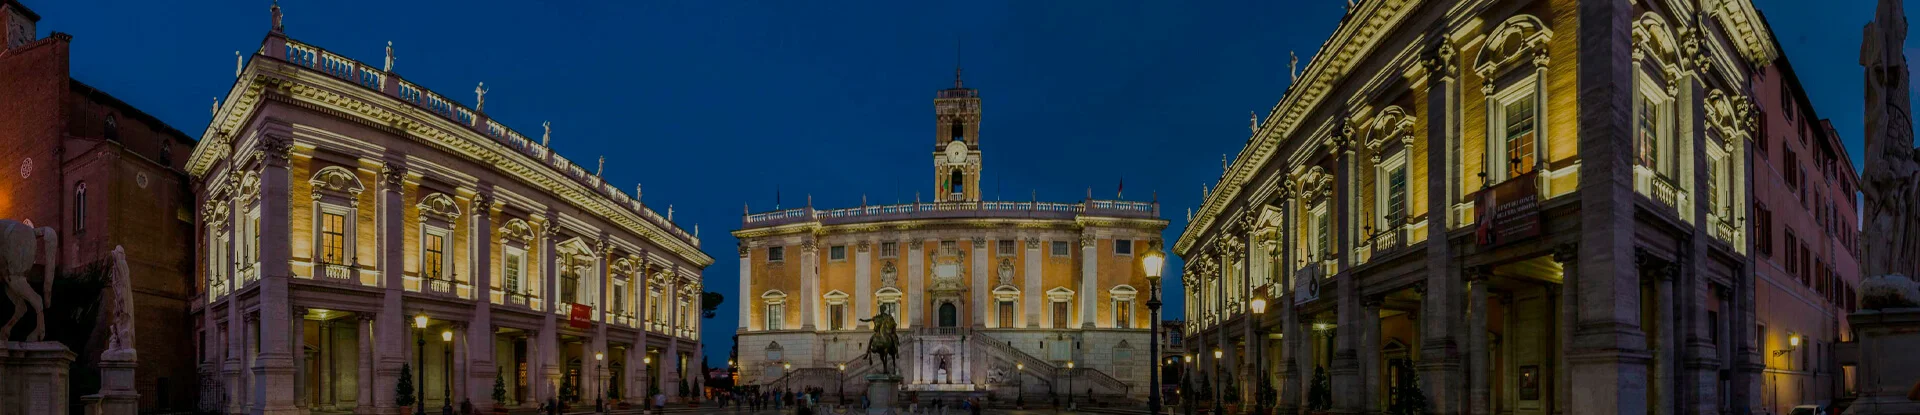 Acea's light designers and Rome's monumental illumination